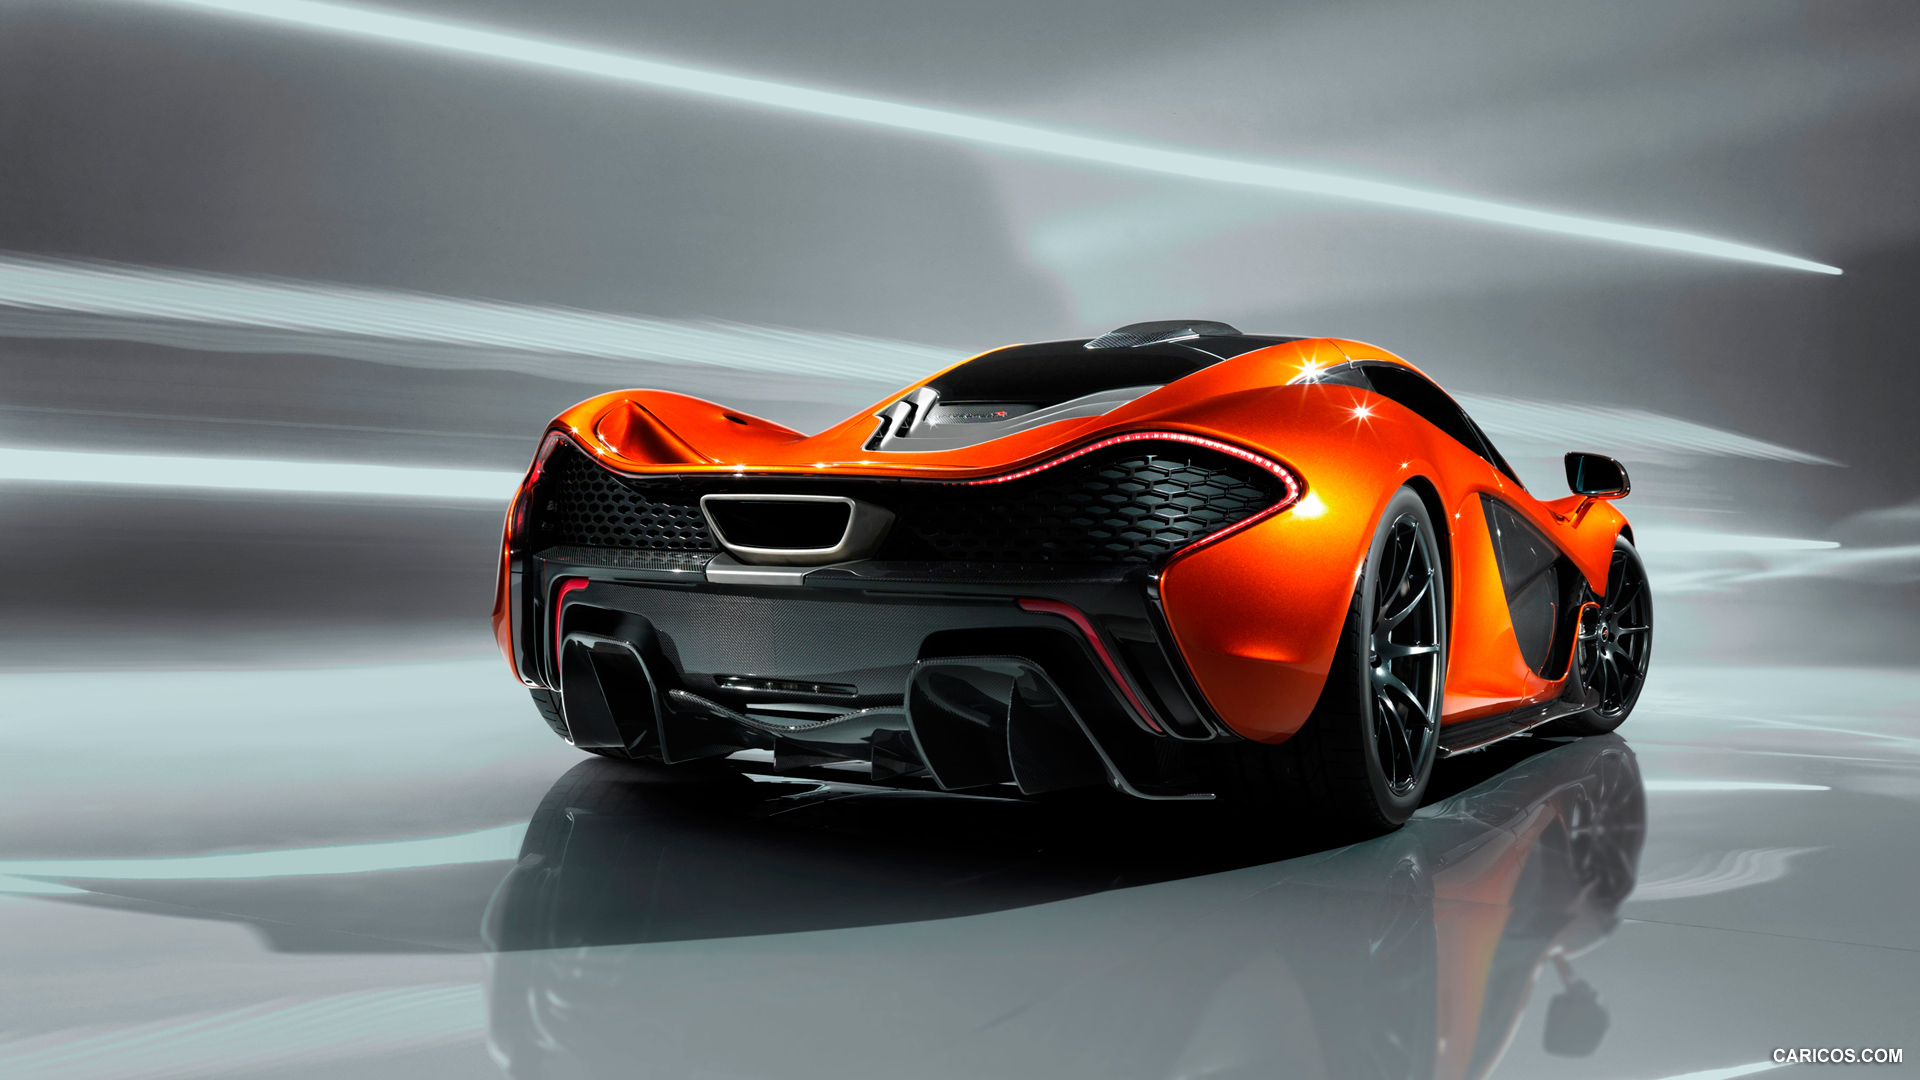 2012 McLaren P1 Concept  - Rear, #3 of 15